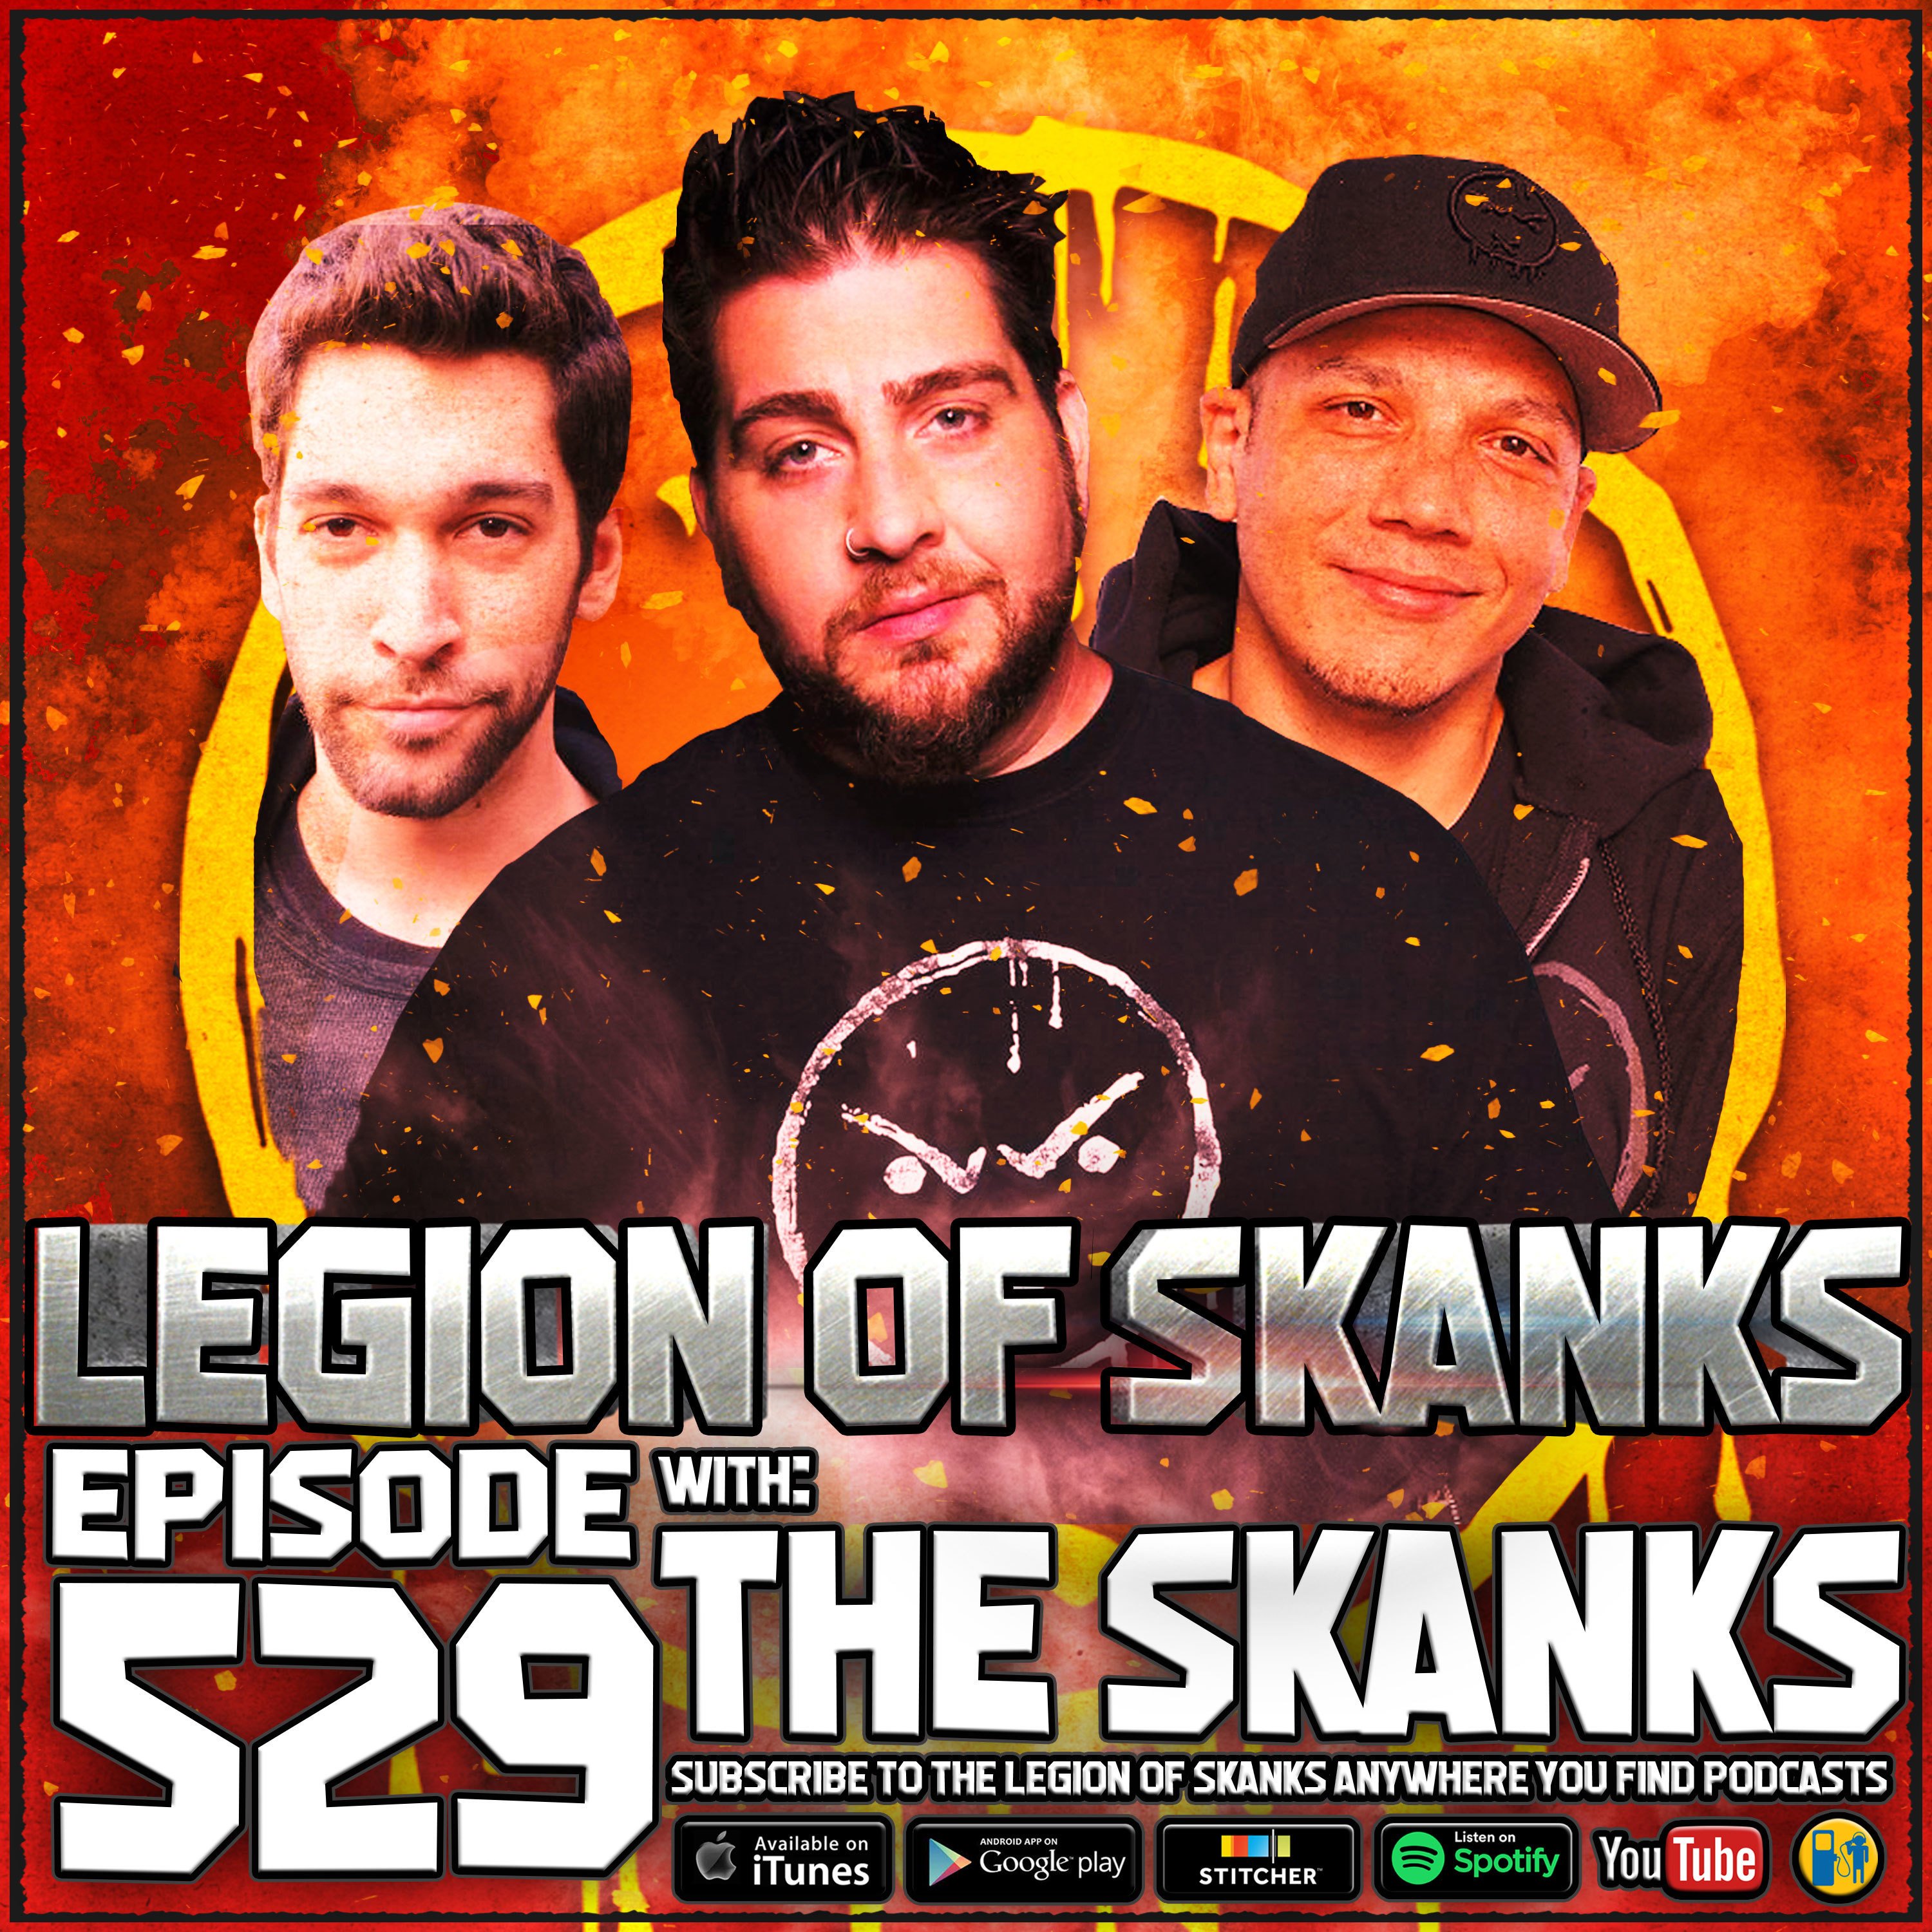 Legion of skanks